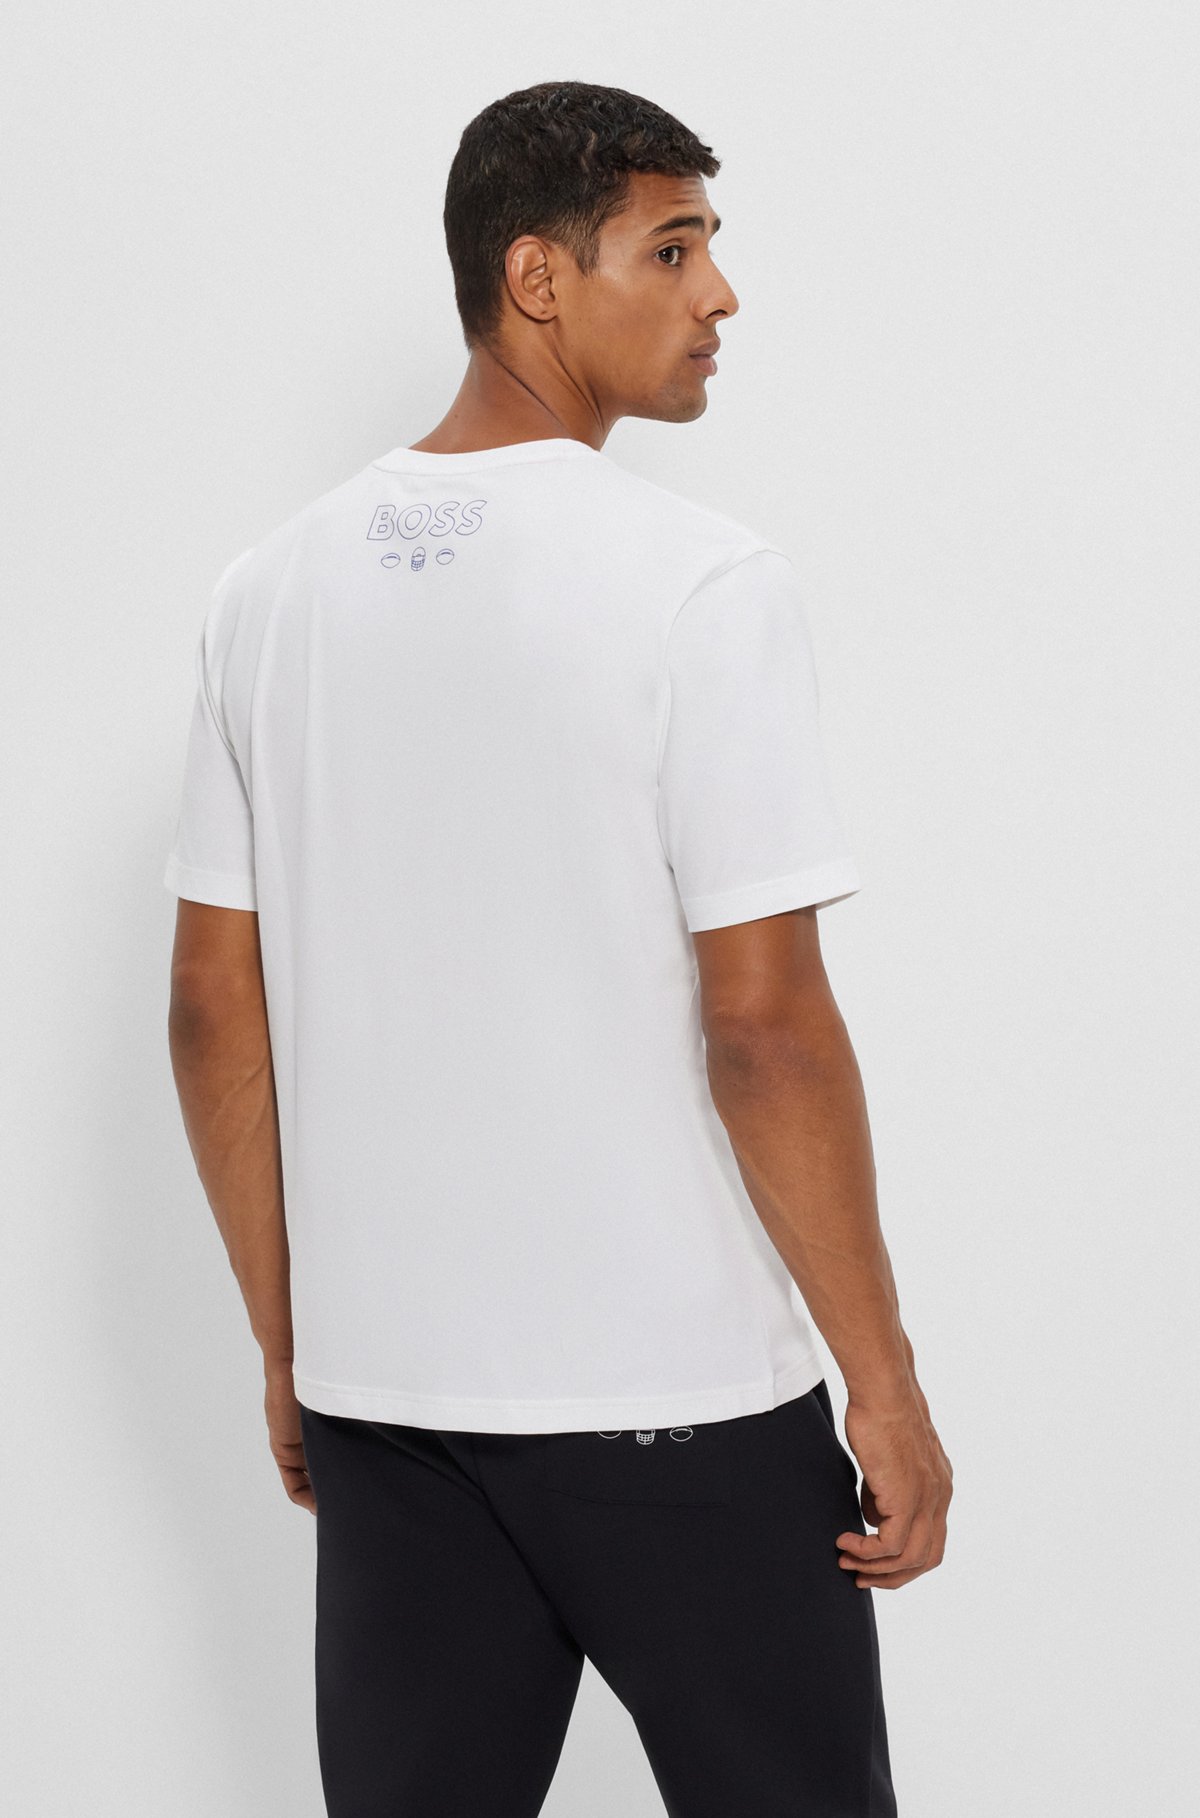  BOSS x NFL stretch-cotton T-shirt with collaborative branding, Bills